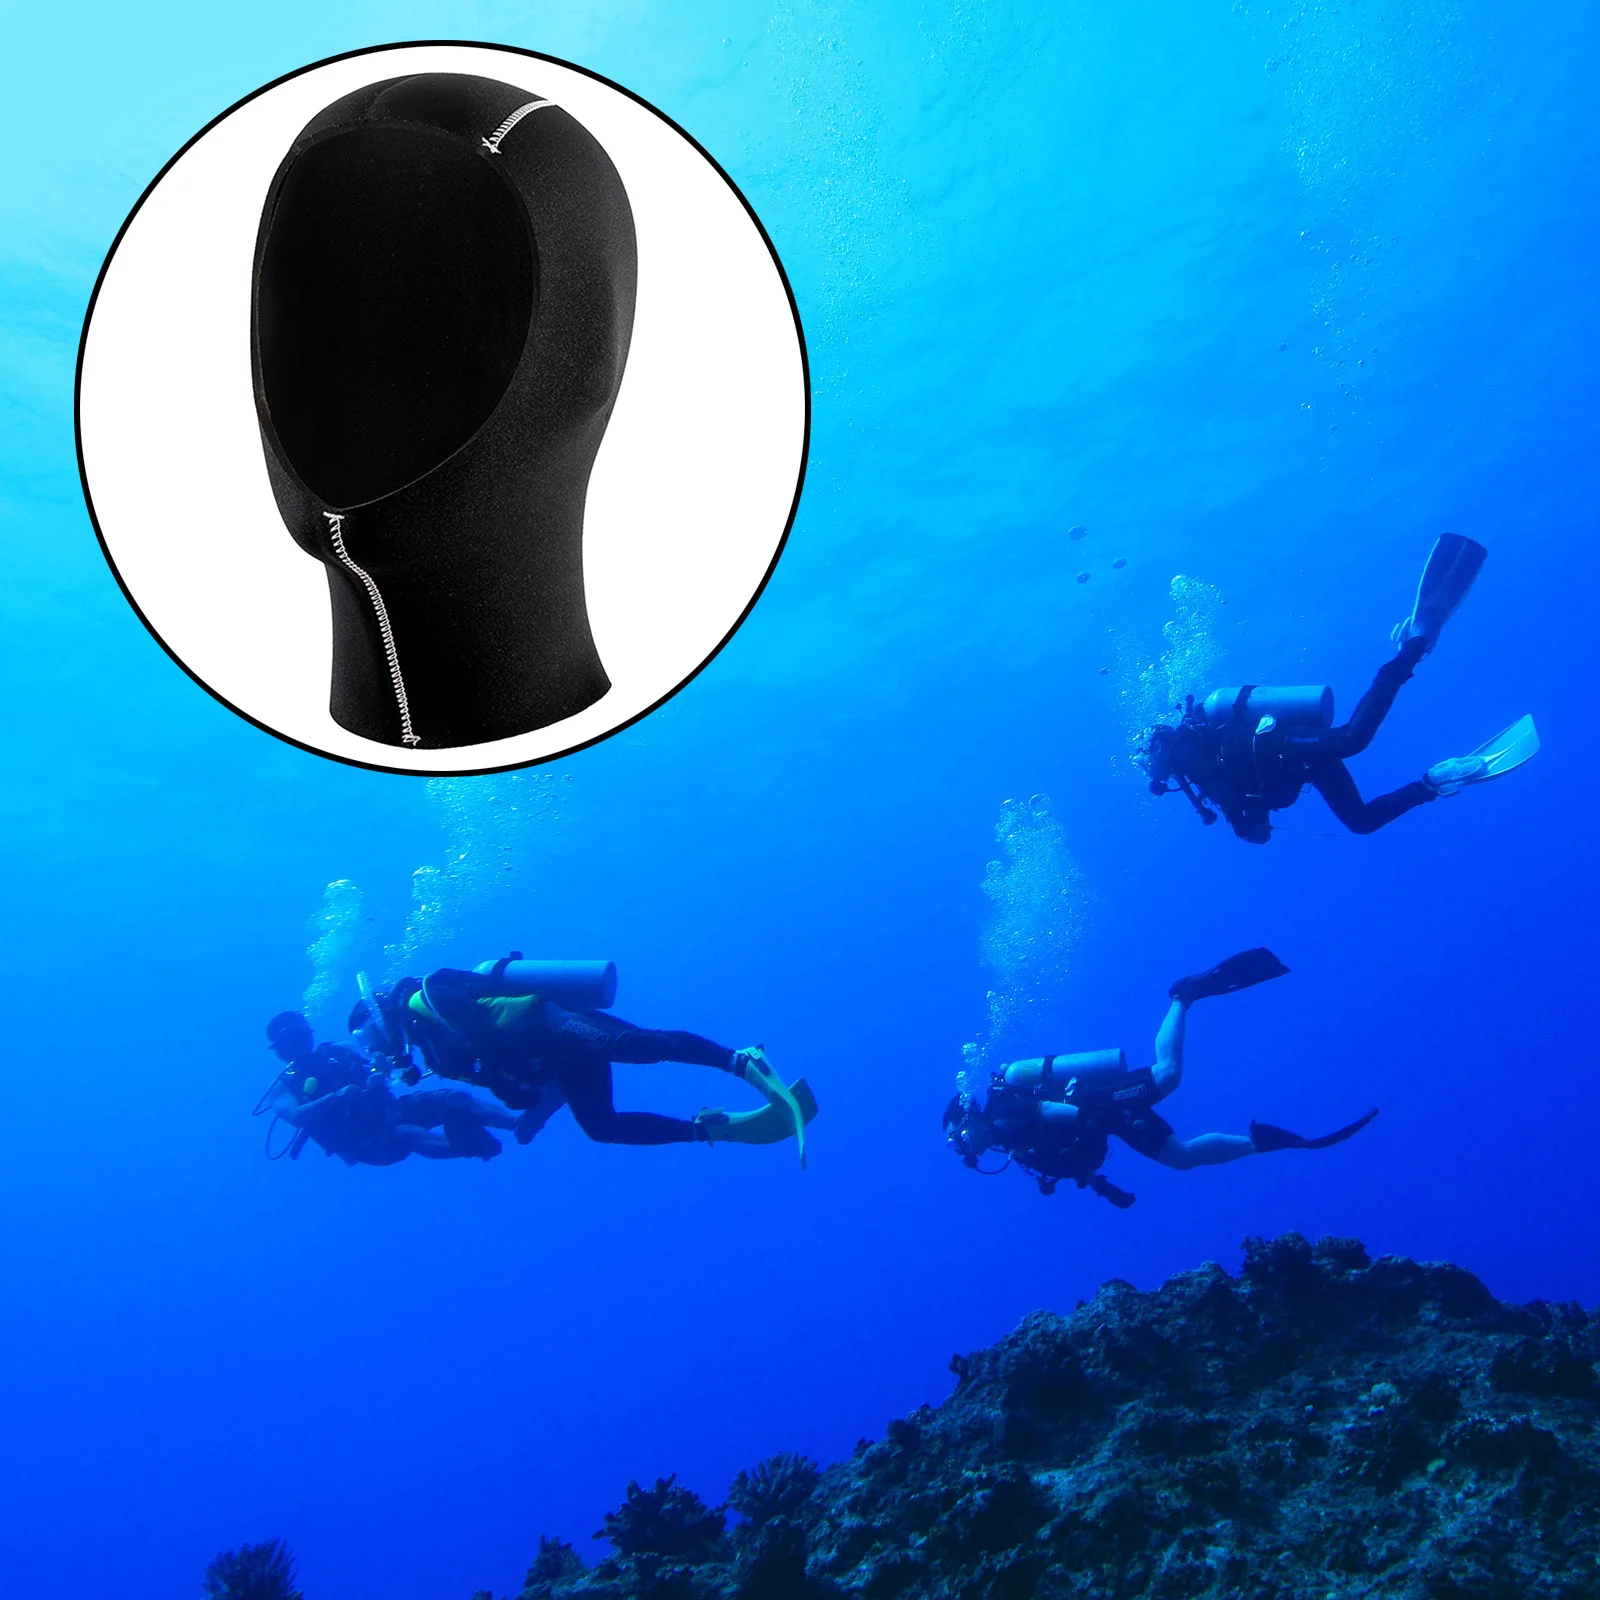 Neoprene Diving Hood Full Face Mask Keep Warm Swimming Wetsuit Hooded for Men Women Water Sports